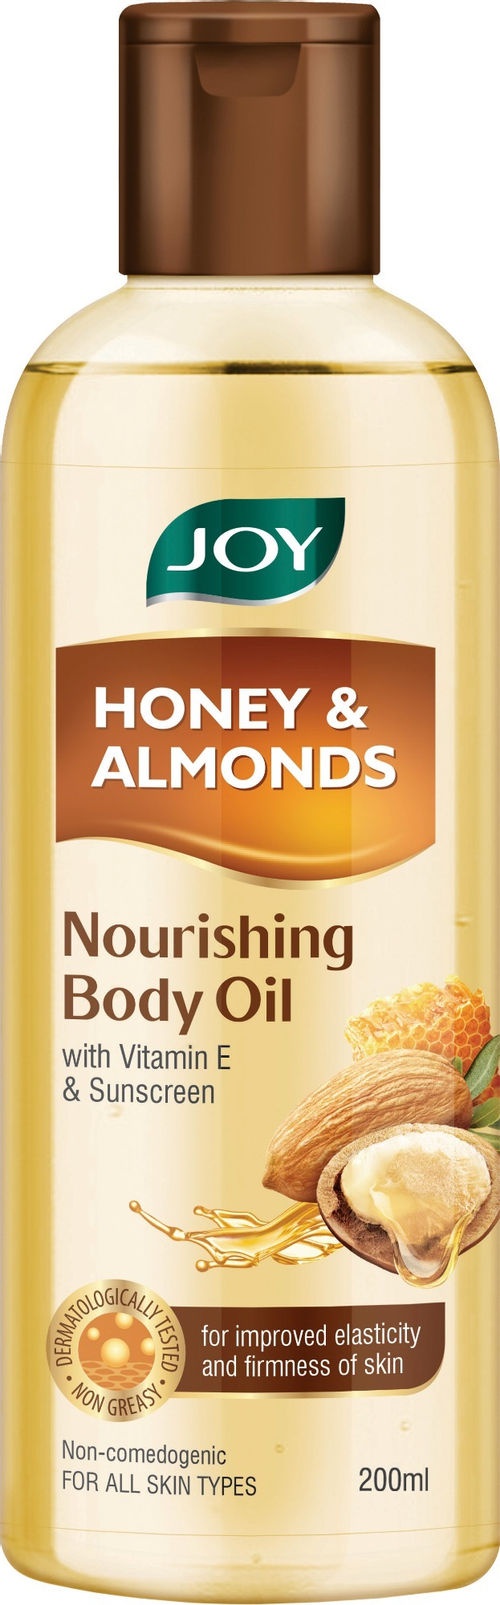 Joy Honey & Almonds Nourishing Body Oil, With Vitamin E & Sunscreen